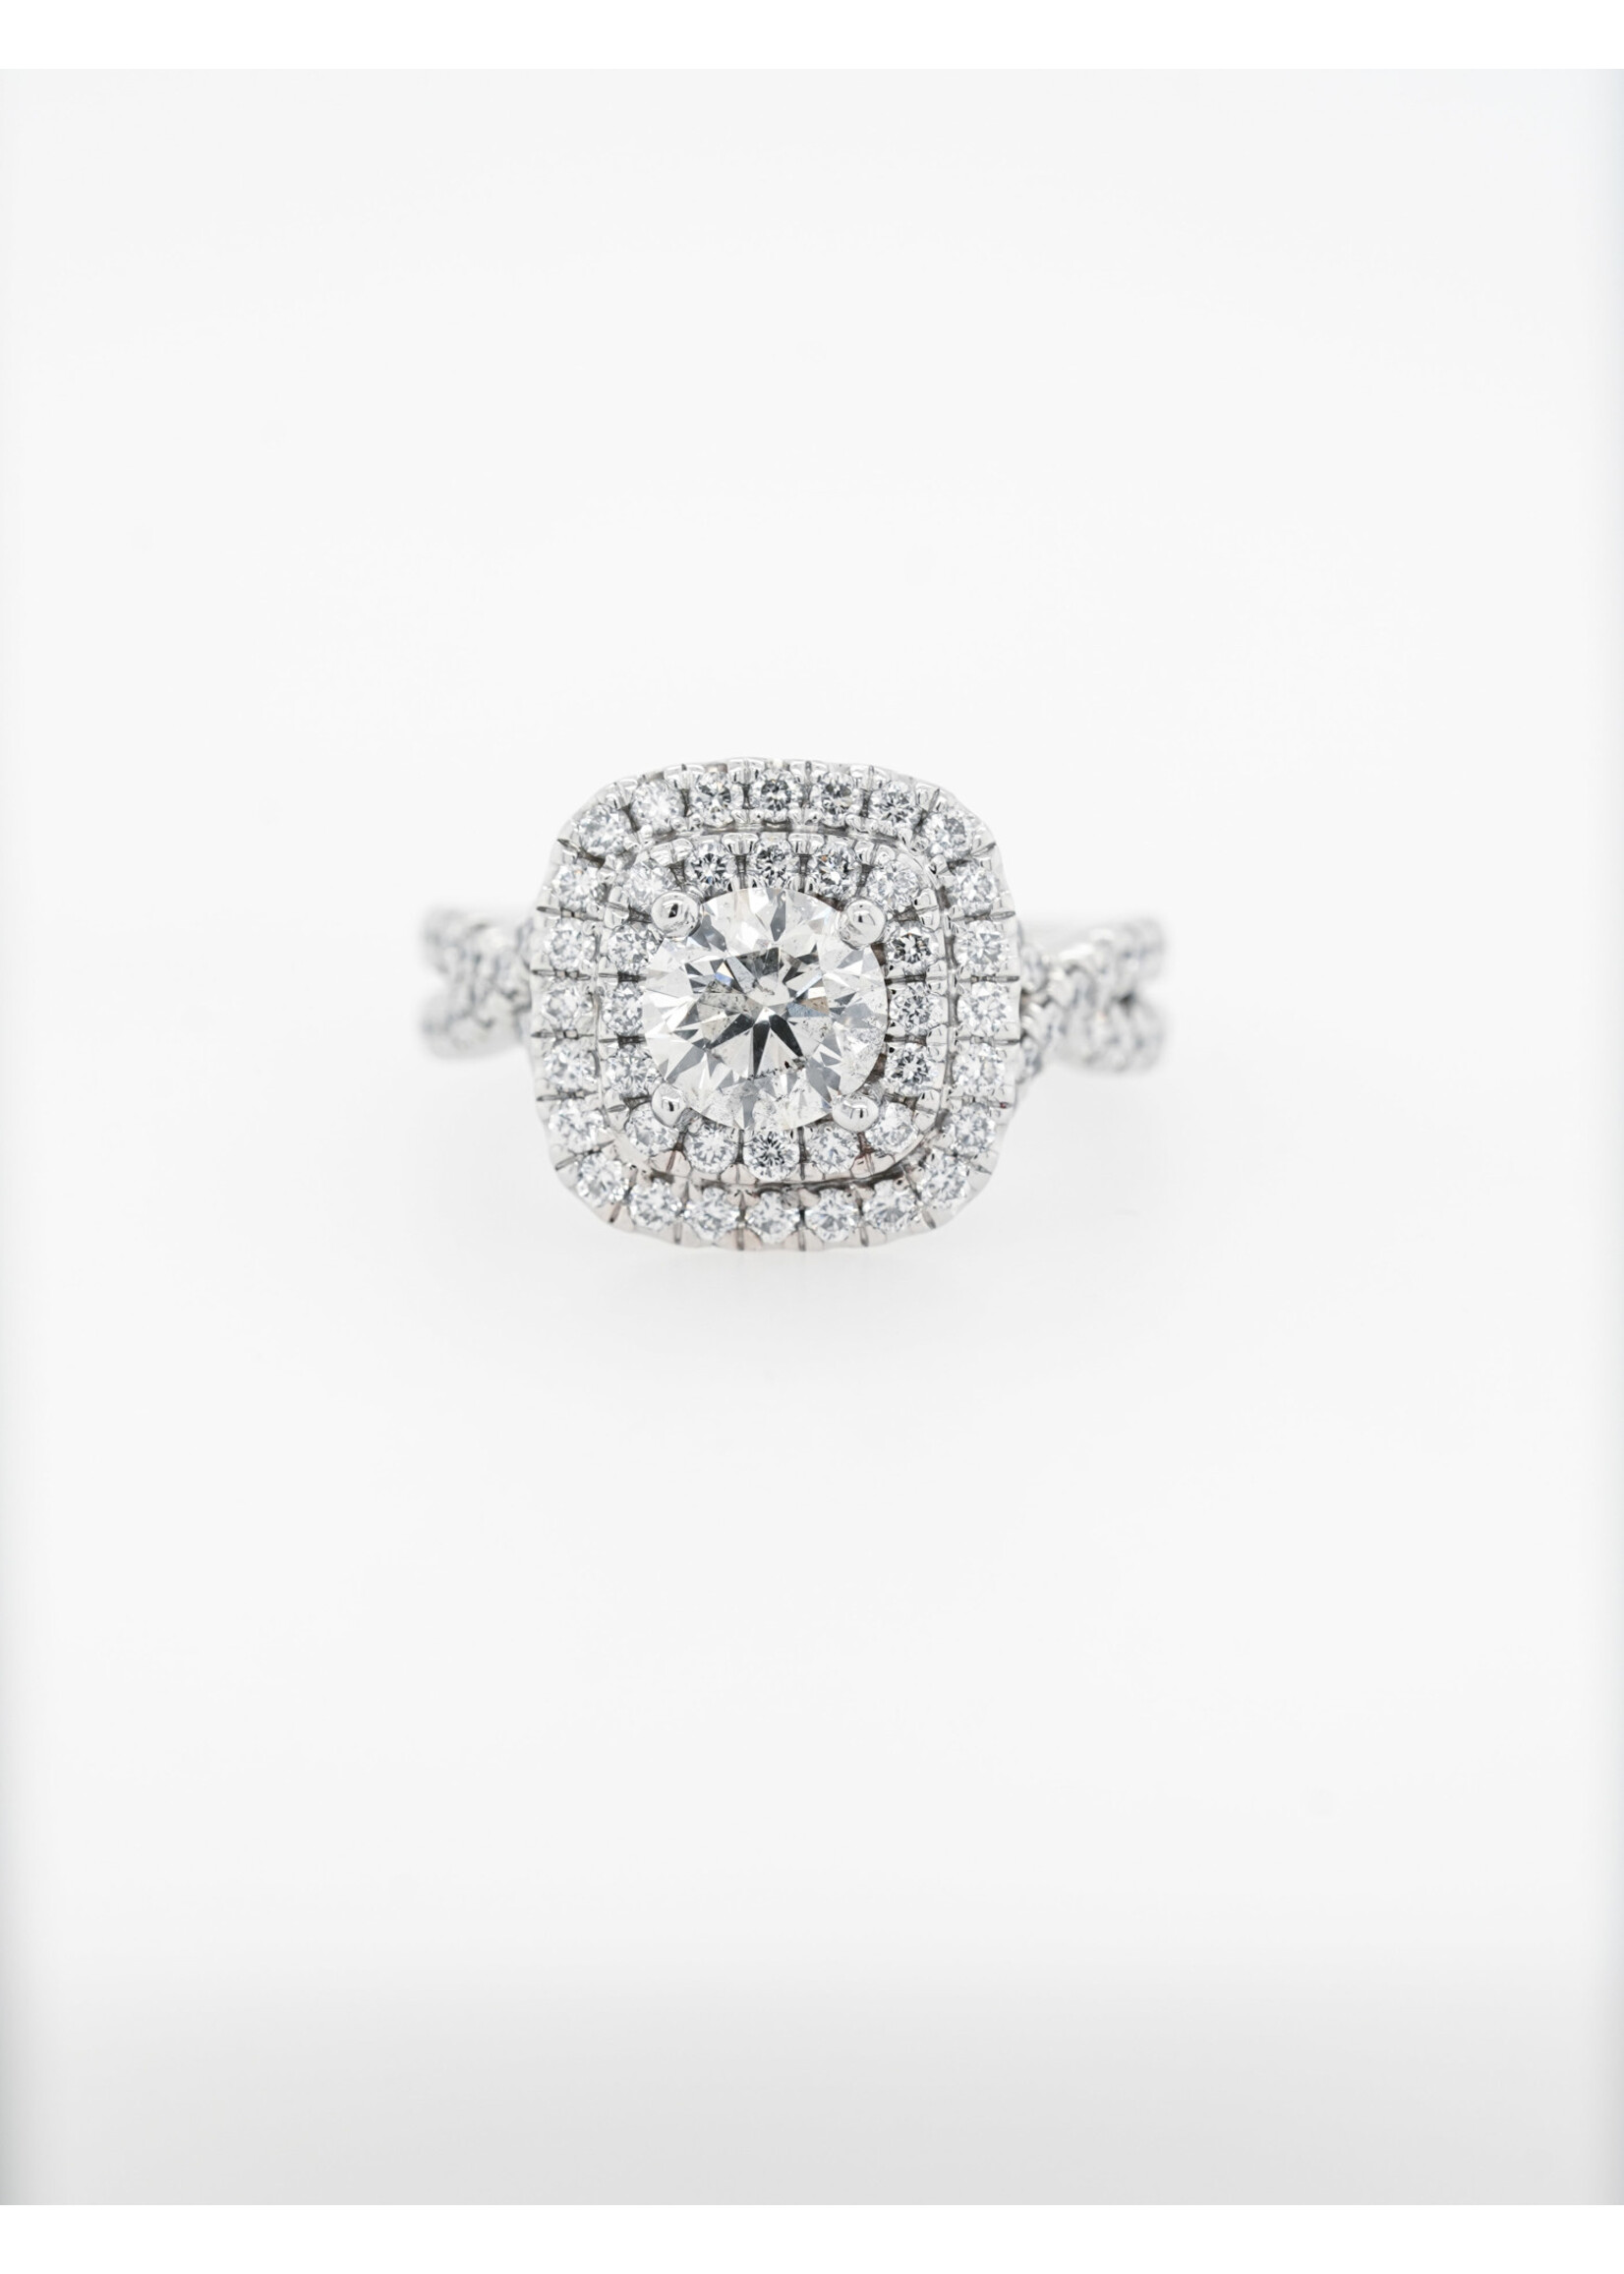 14KW 6.14g 2.02ctw (1.02ctr) G/I1 Round Diamond Gabriel Engagement Ring (size 5.5)